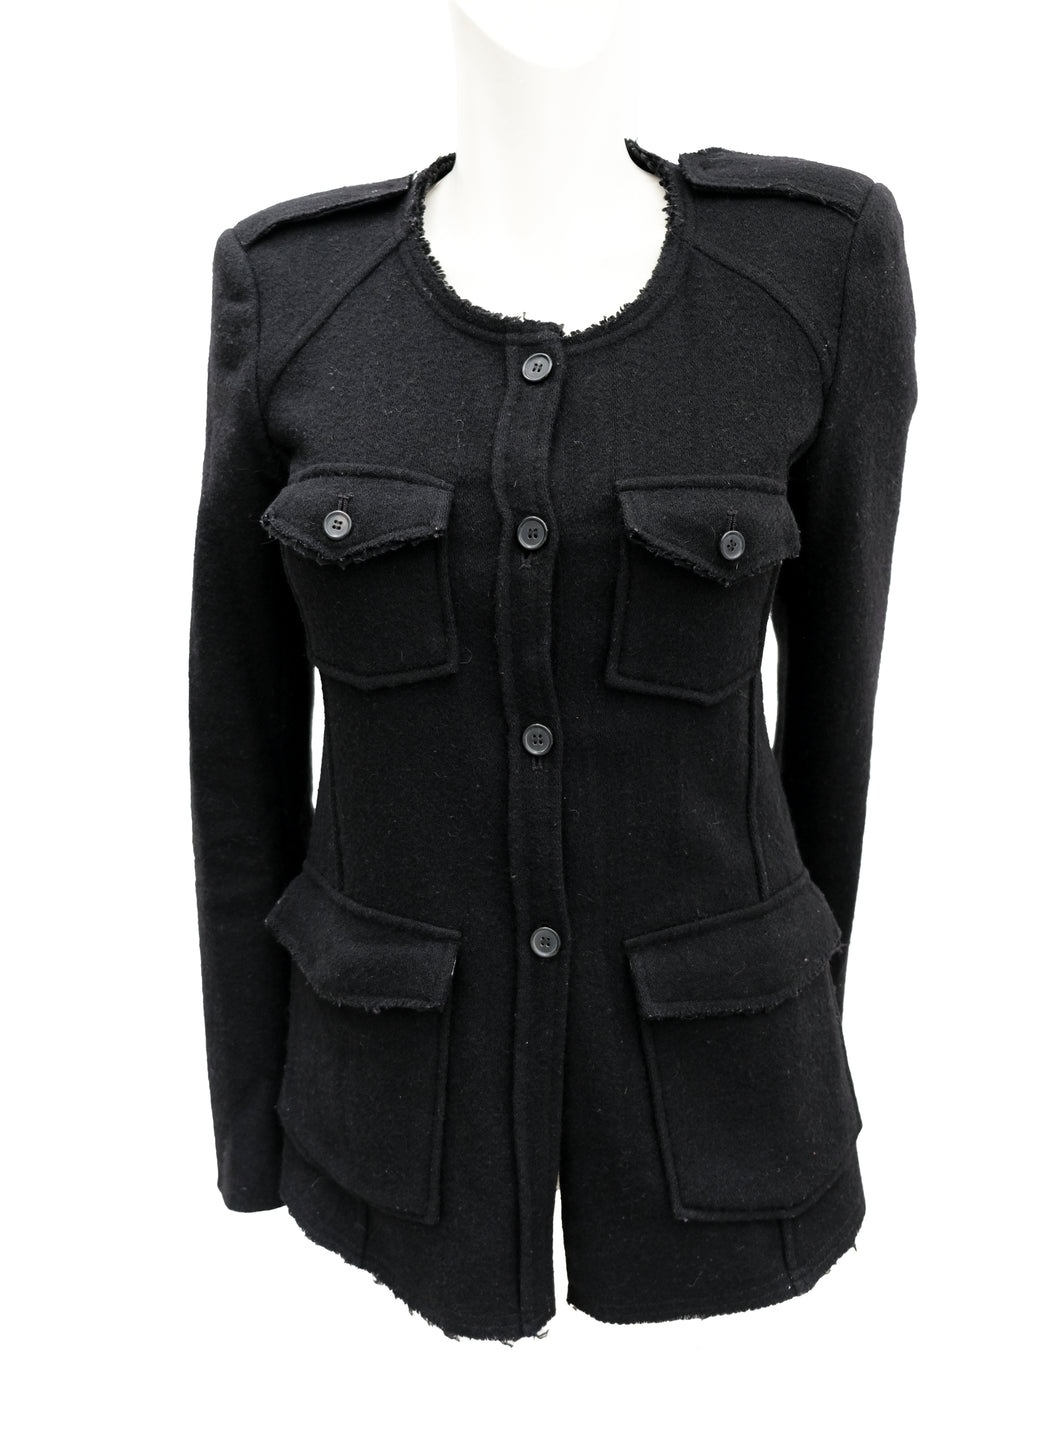 Isabel Marant Collarless Unstructured Jacket in Black Wool, UK8-10